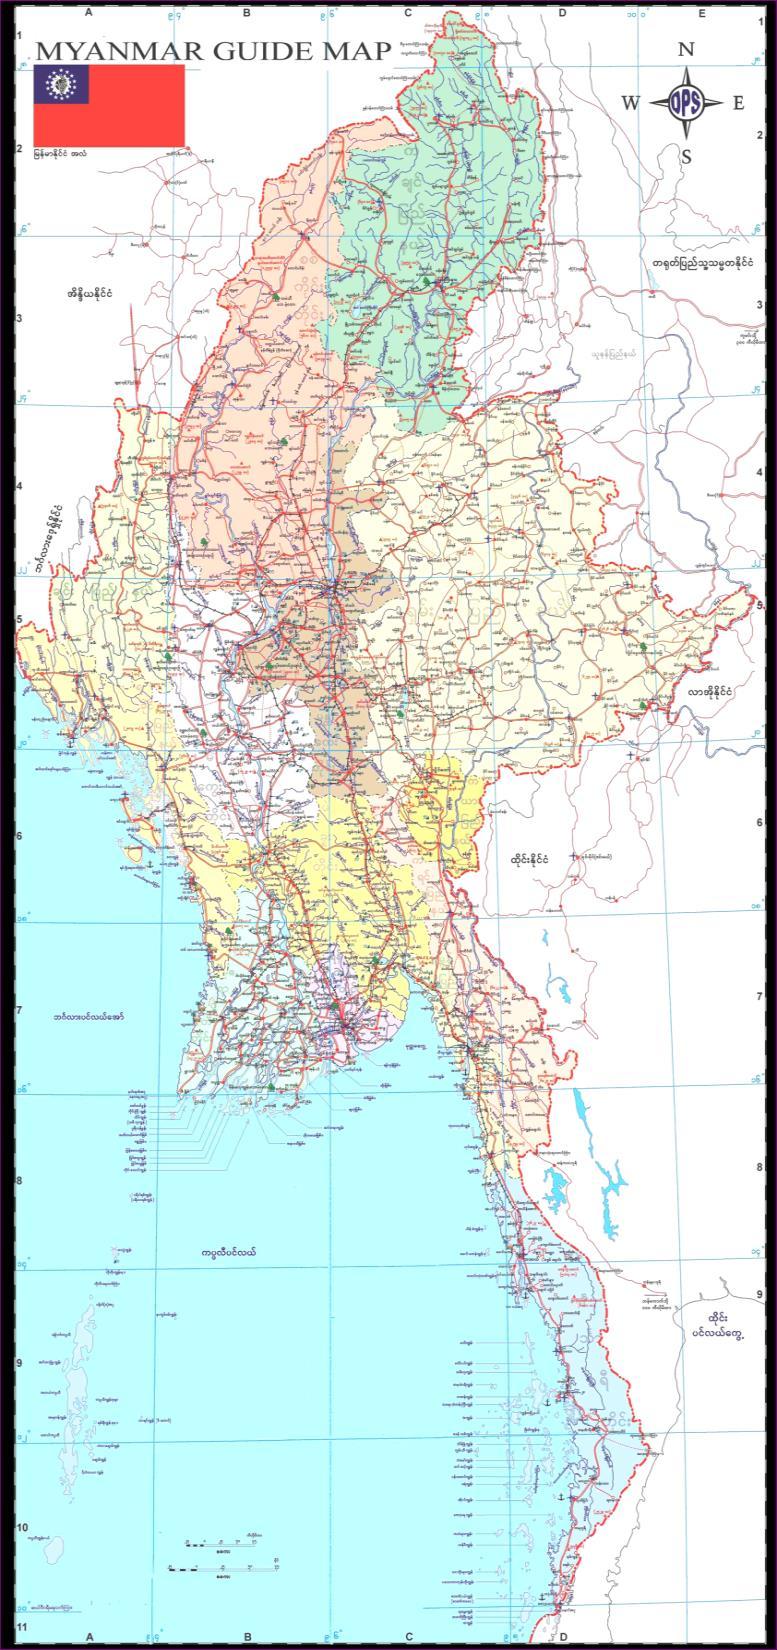 Vietnam to Thailand Fiber link (4400km)